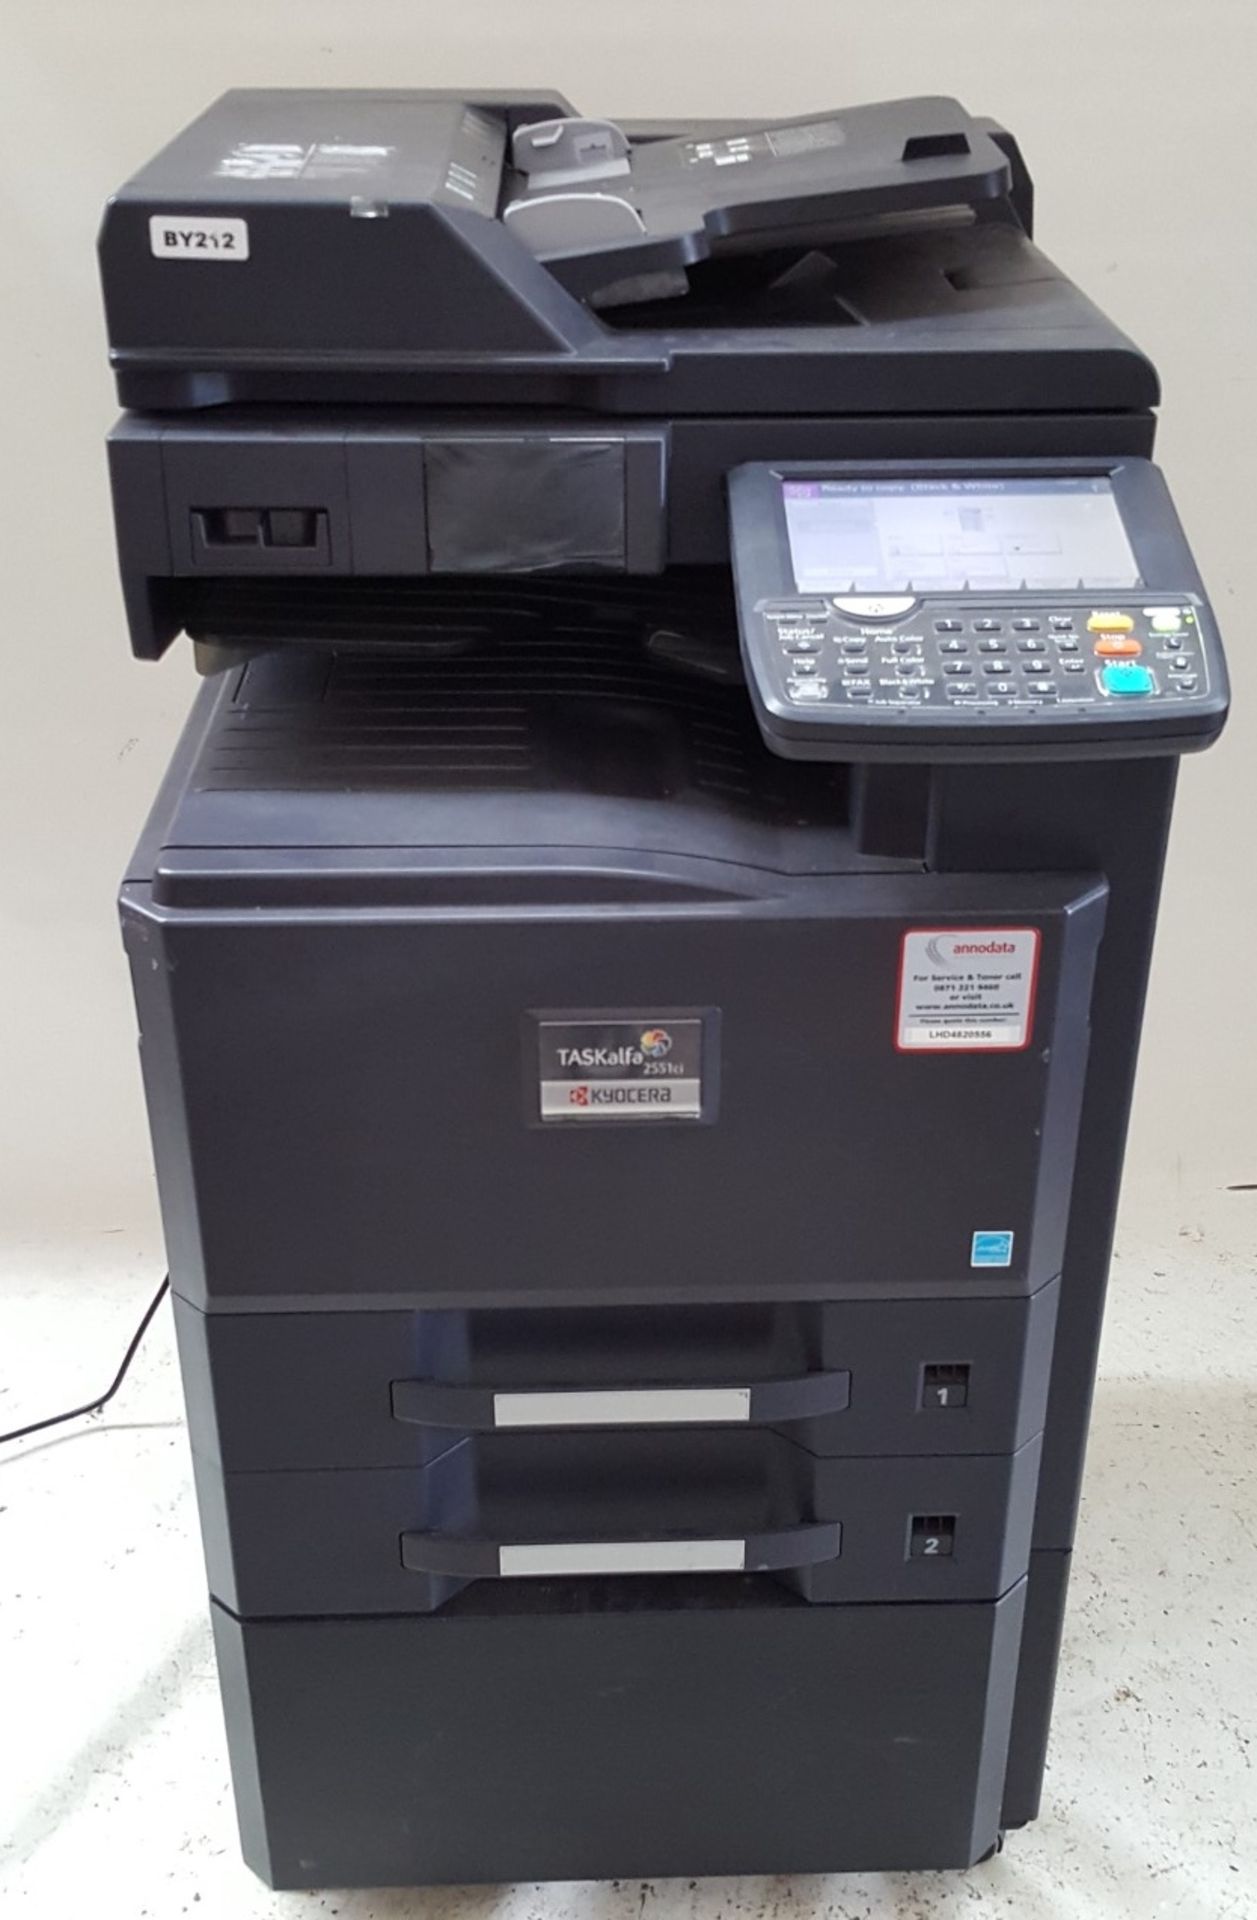 1 x KYOCERA TASKALFA 2551ci Multifunction Office Printer - Ref BY212